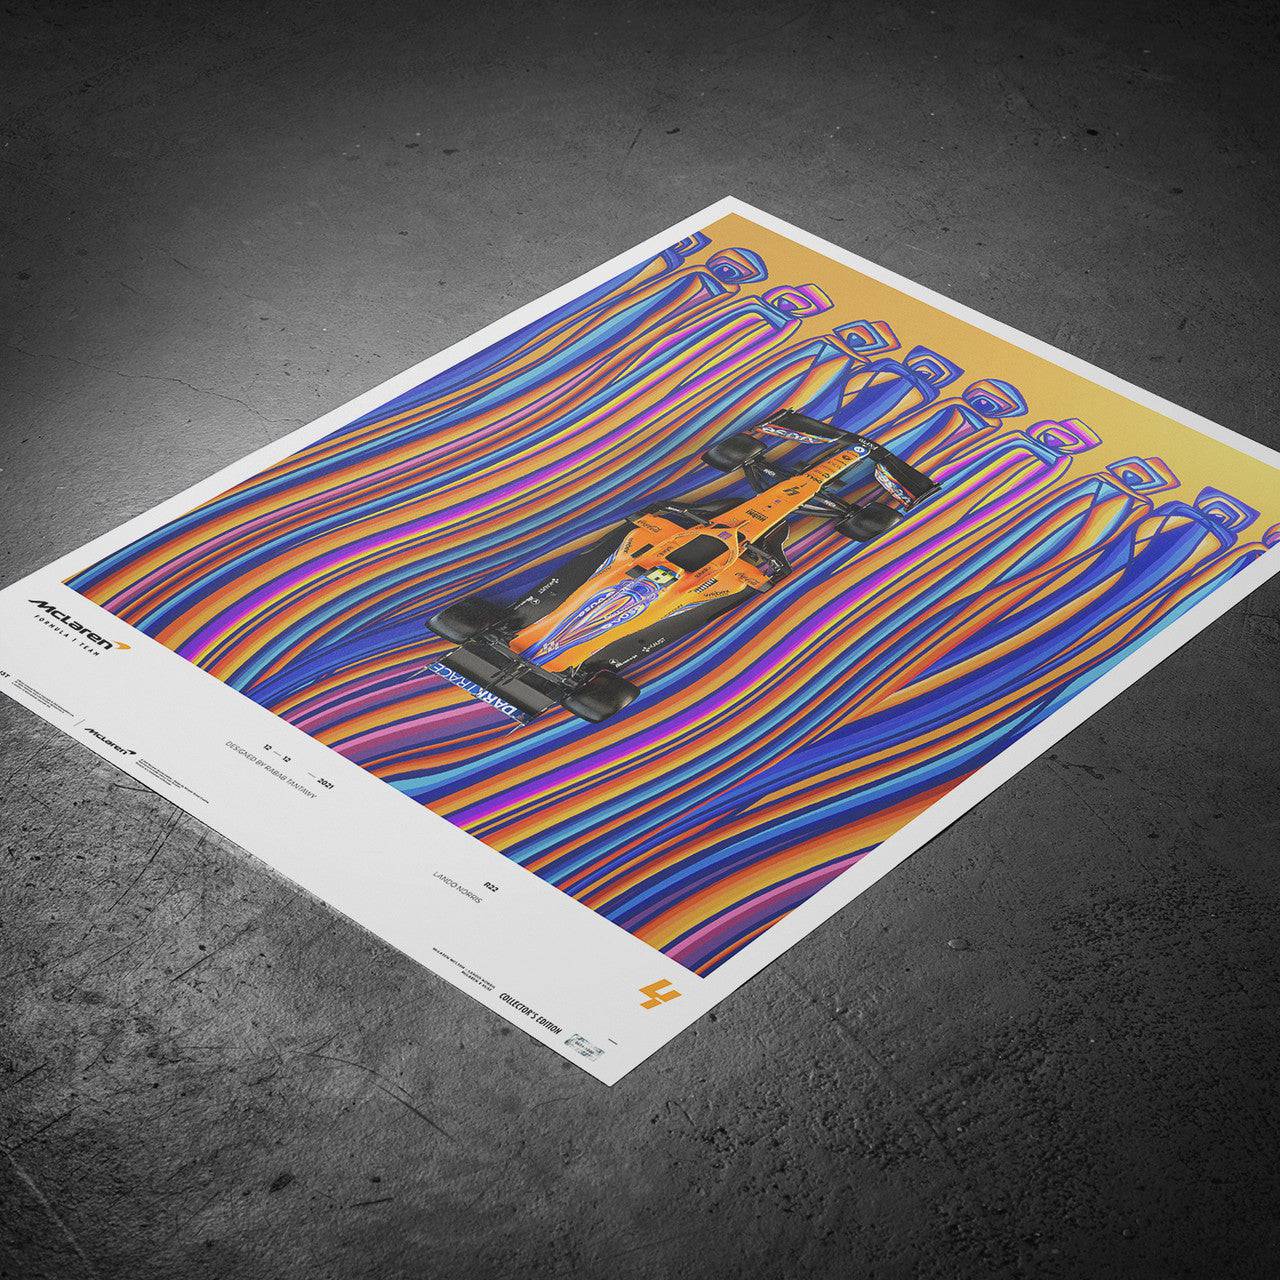 McLaren x Vuse - Lando Norris - Driven by Change 2021 | Collector’s Edition